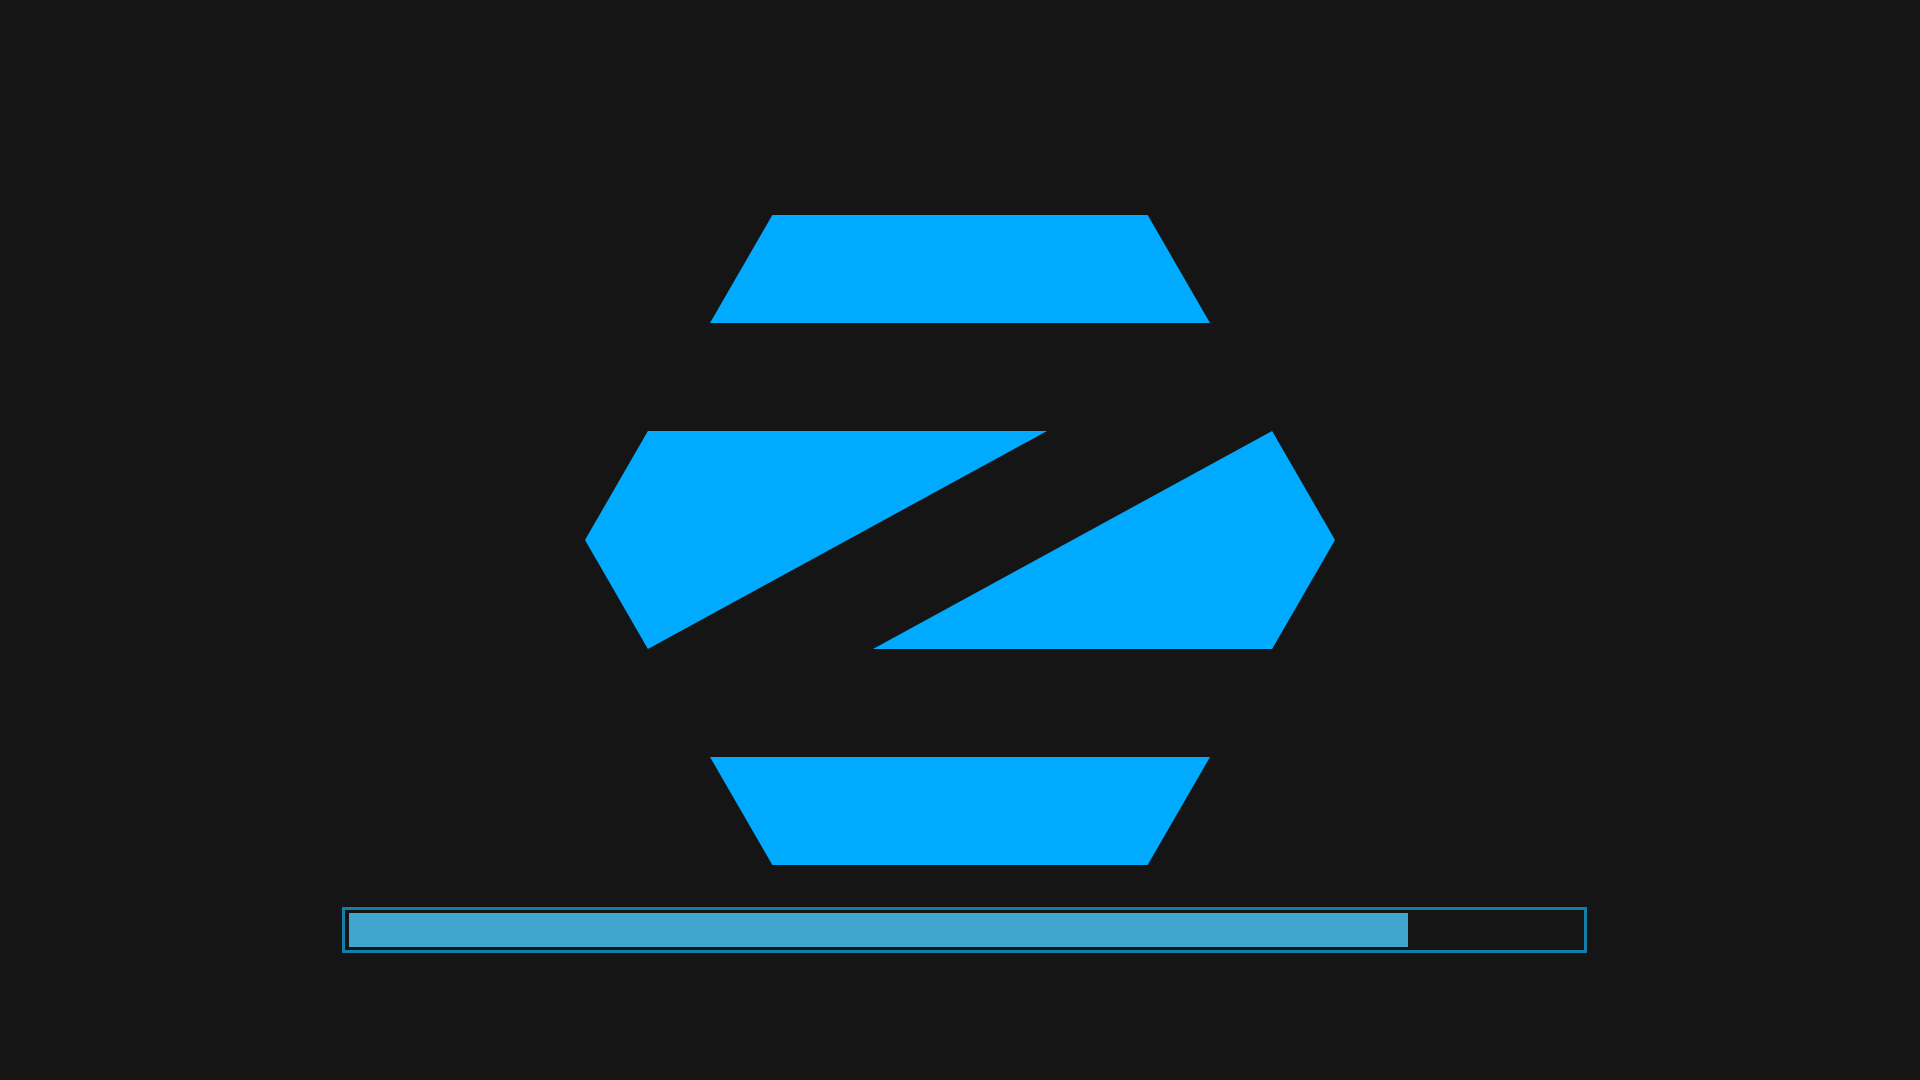 Zorin OS Minimalism Logo Loading Humor 1920x1080